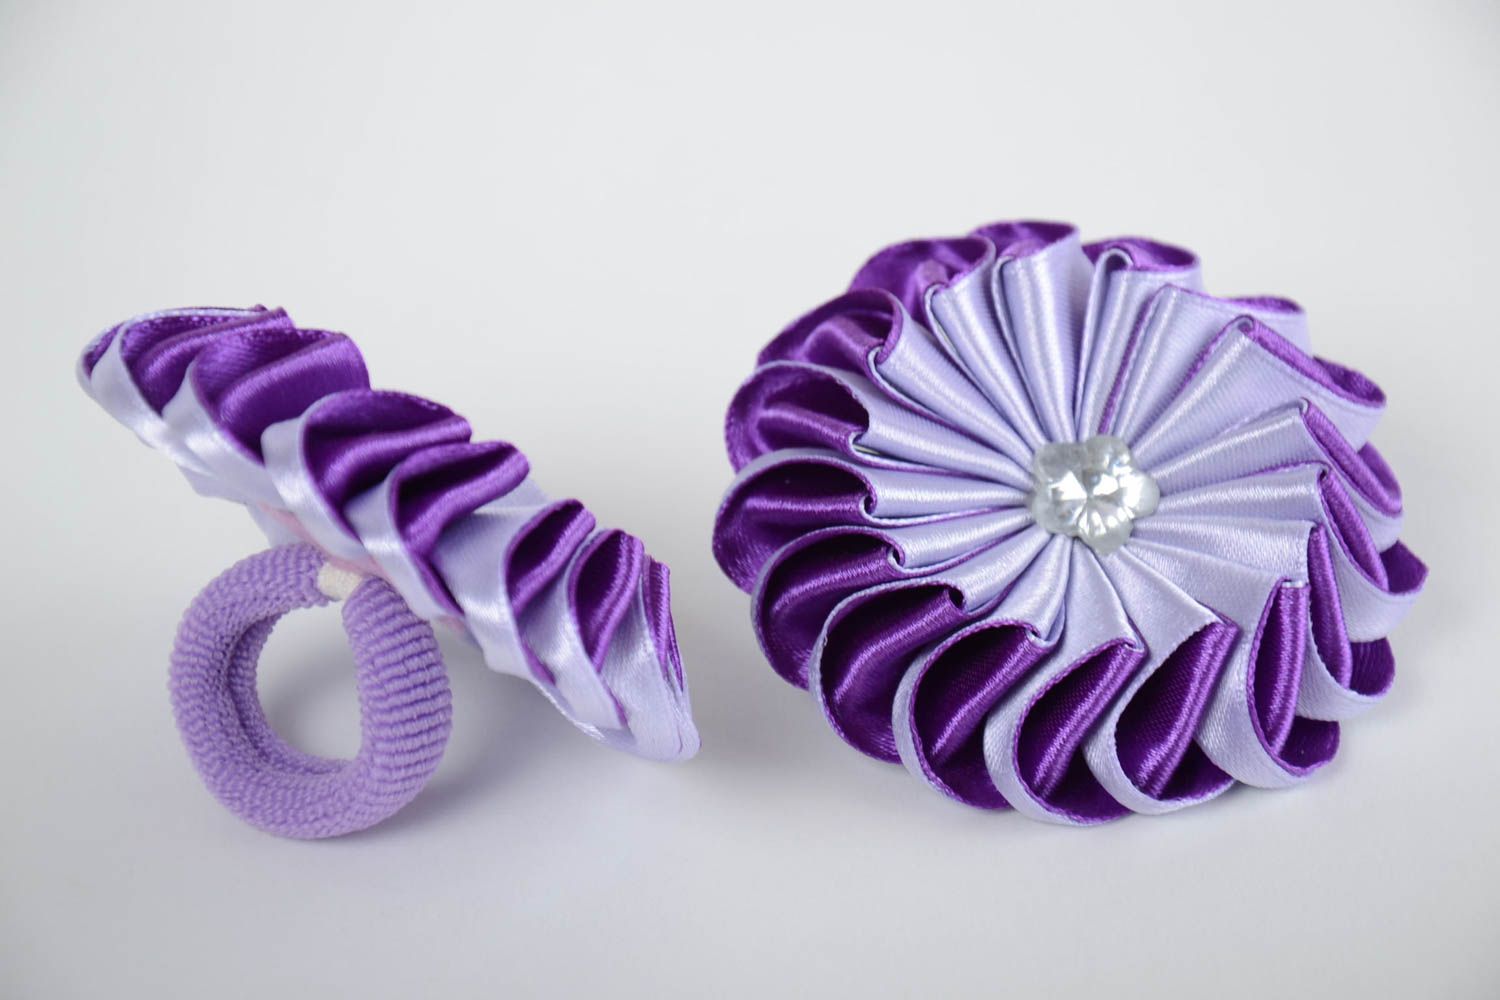 Handmade hair ties made of satin ribbons using kanzashi technique 2 pieces photo 2